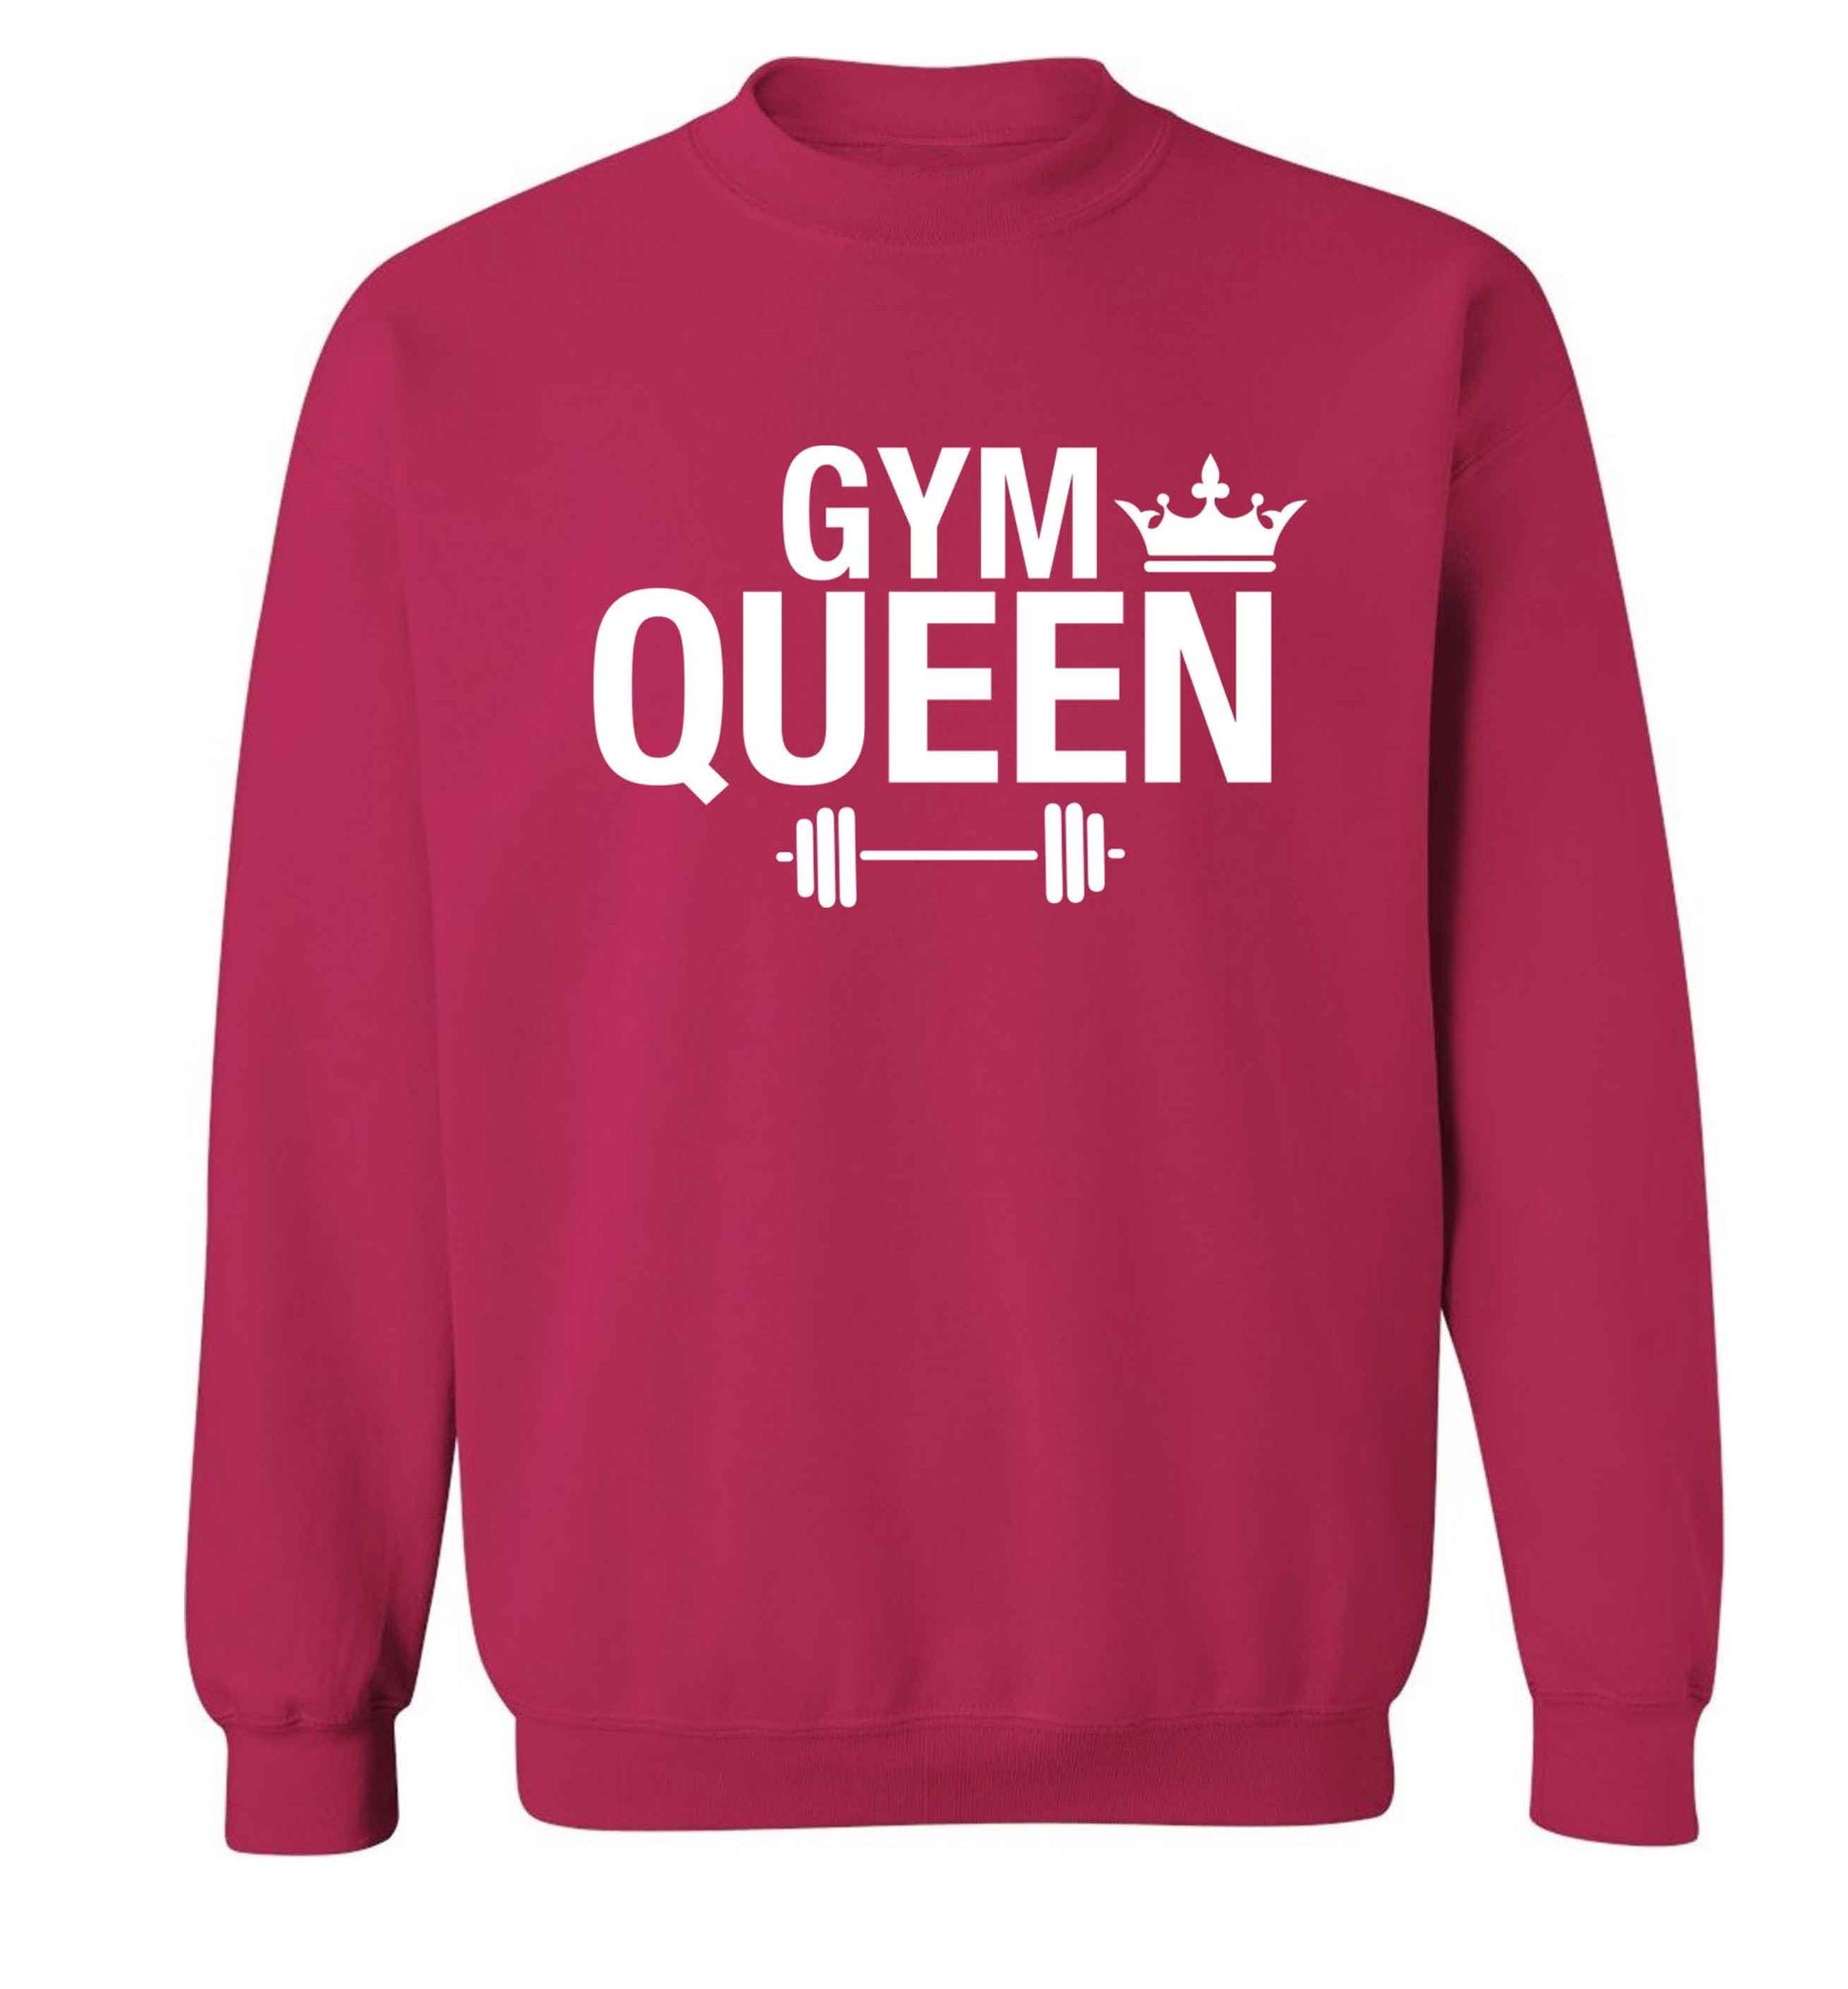 Gym queen Adult's unisex pink Sweater 2XL